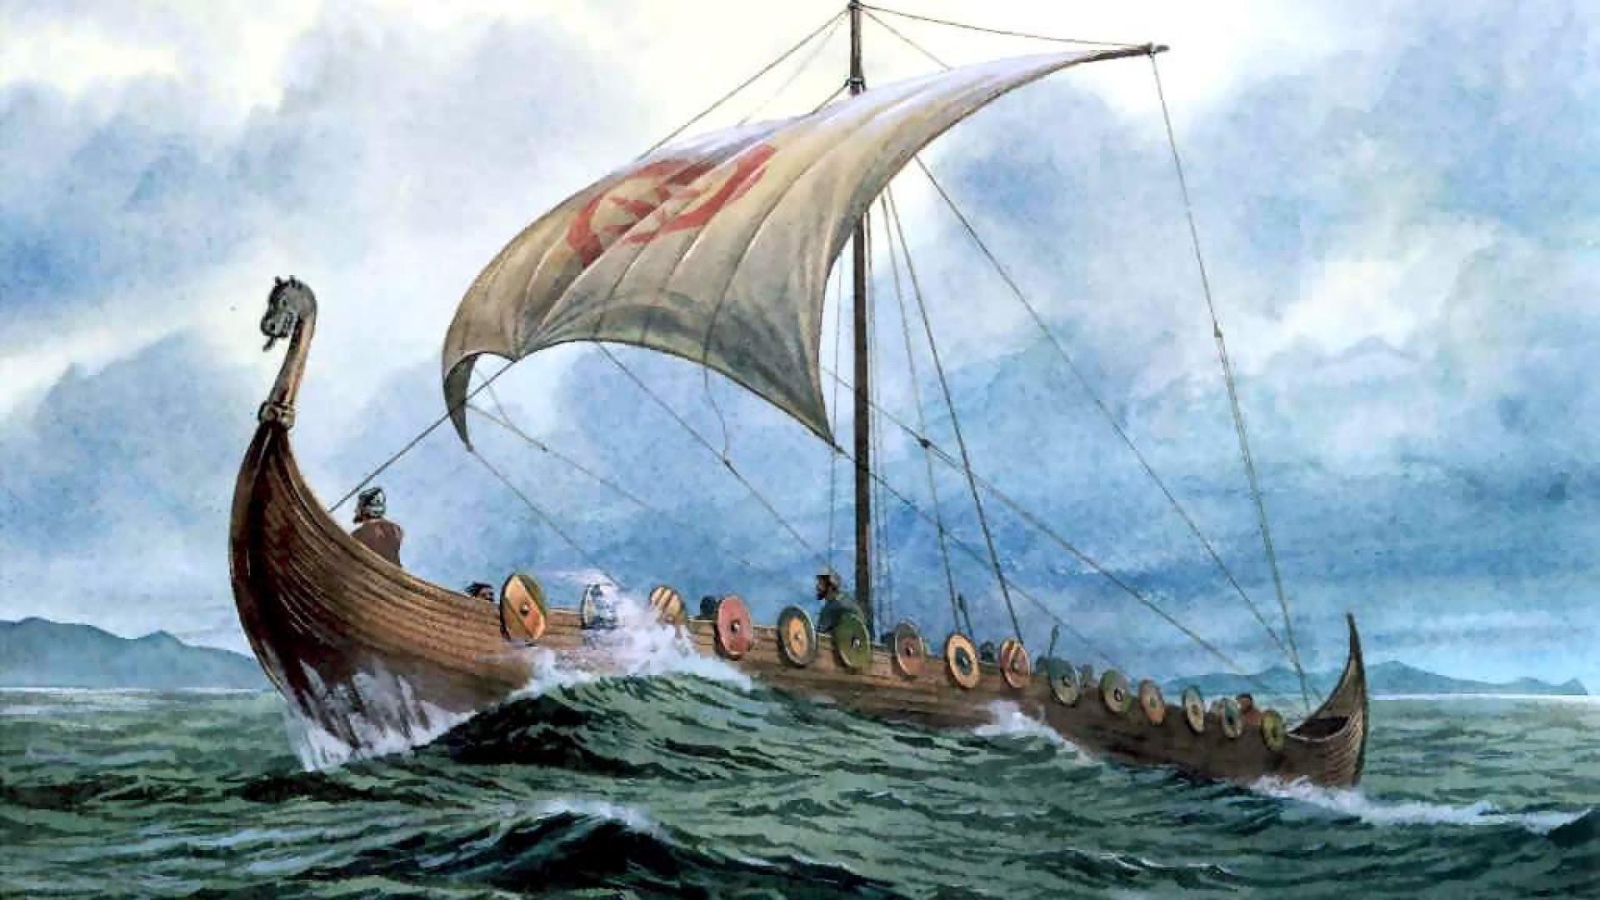 Viking boat in rough seas